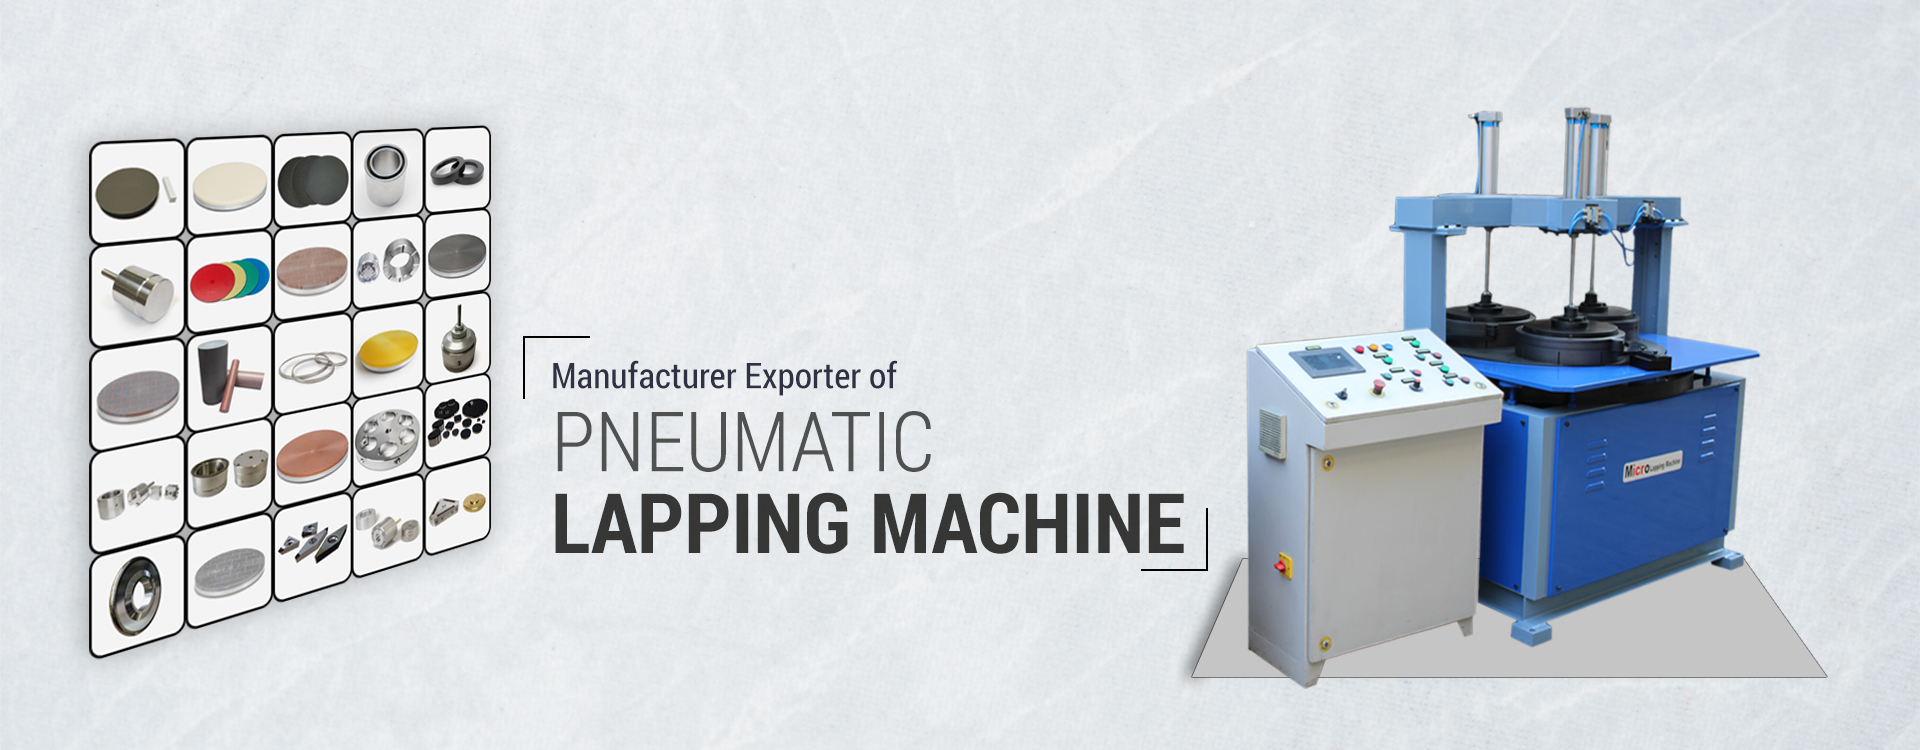 Pneumatic Lapping Machine Manufacturer